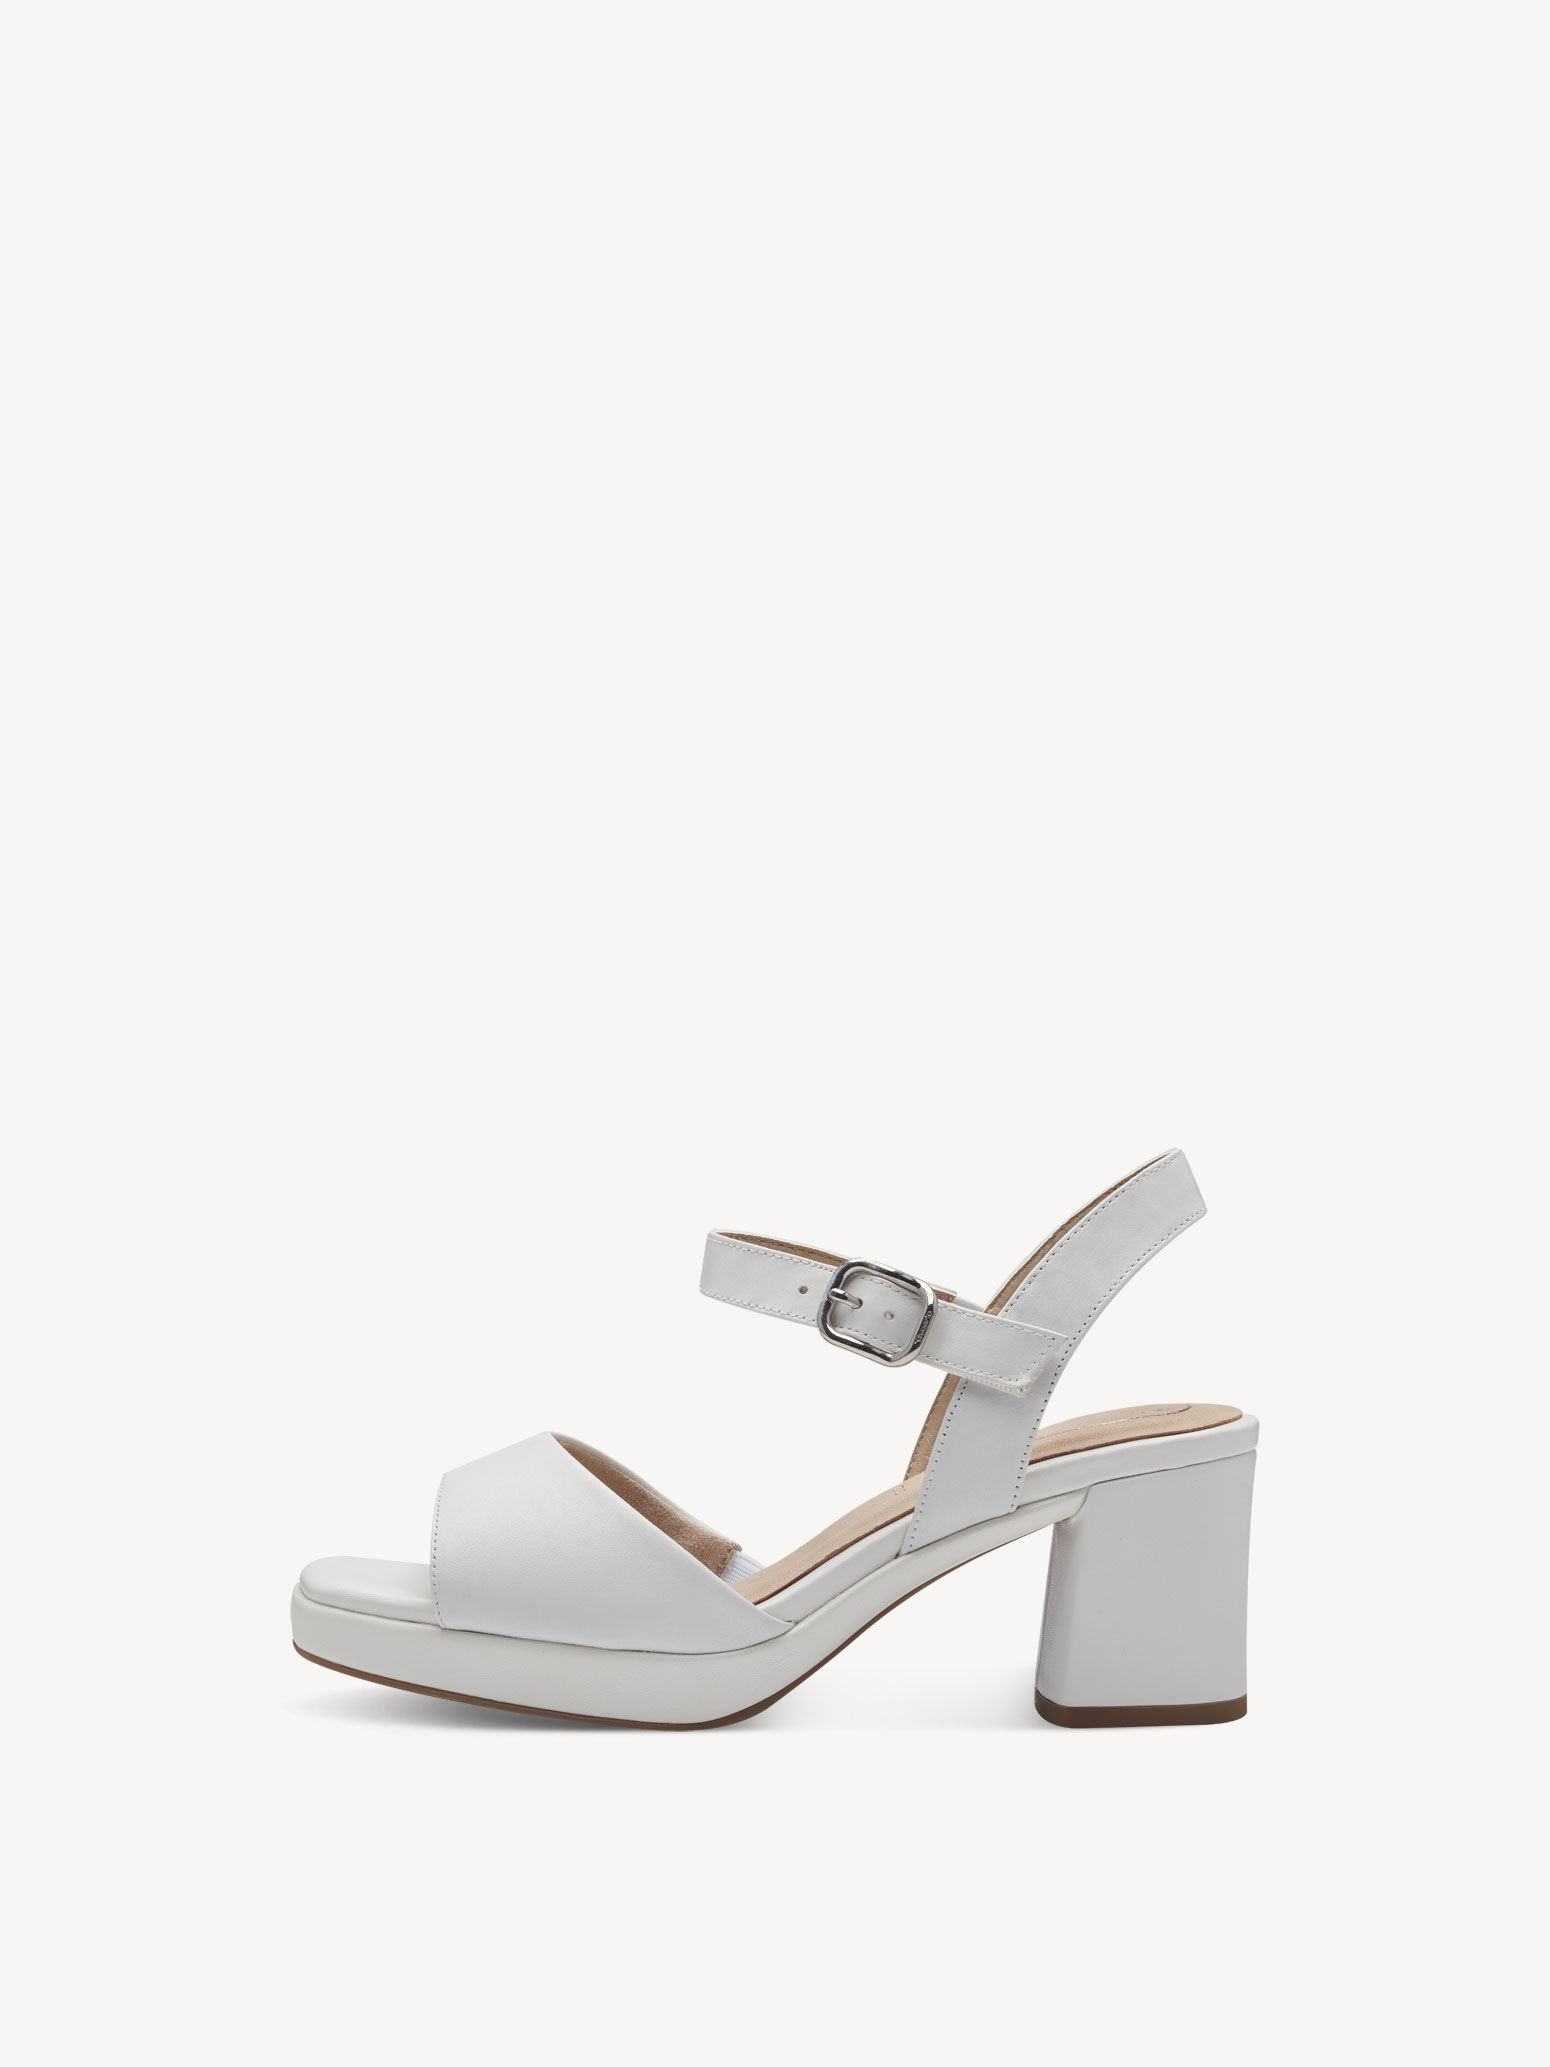 Amazon.com: Women Platform Sandals, Ladies Summer Comfort Slippers Open Toe  Beach Shoes Outdoor Indoor Slide Sandal : Clothing, Shoes & Jewelry